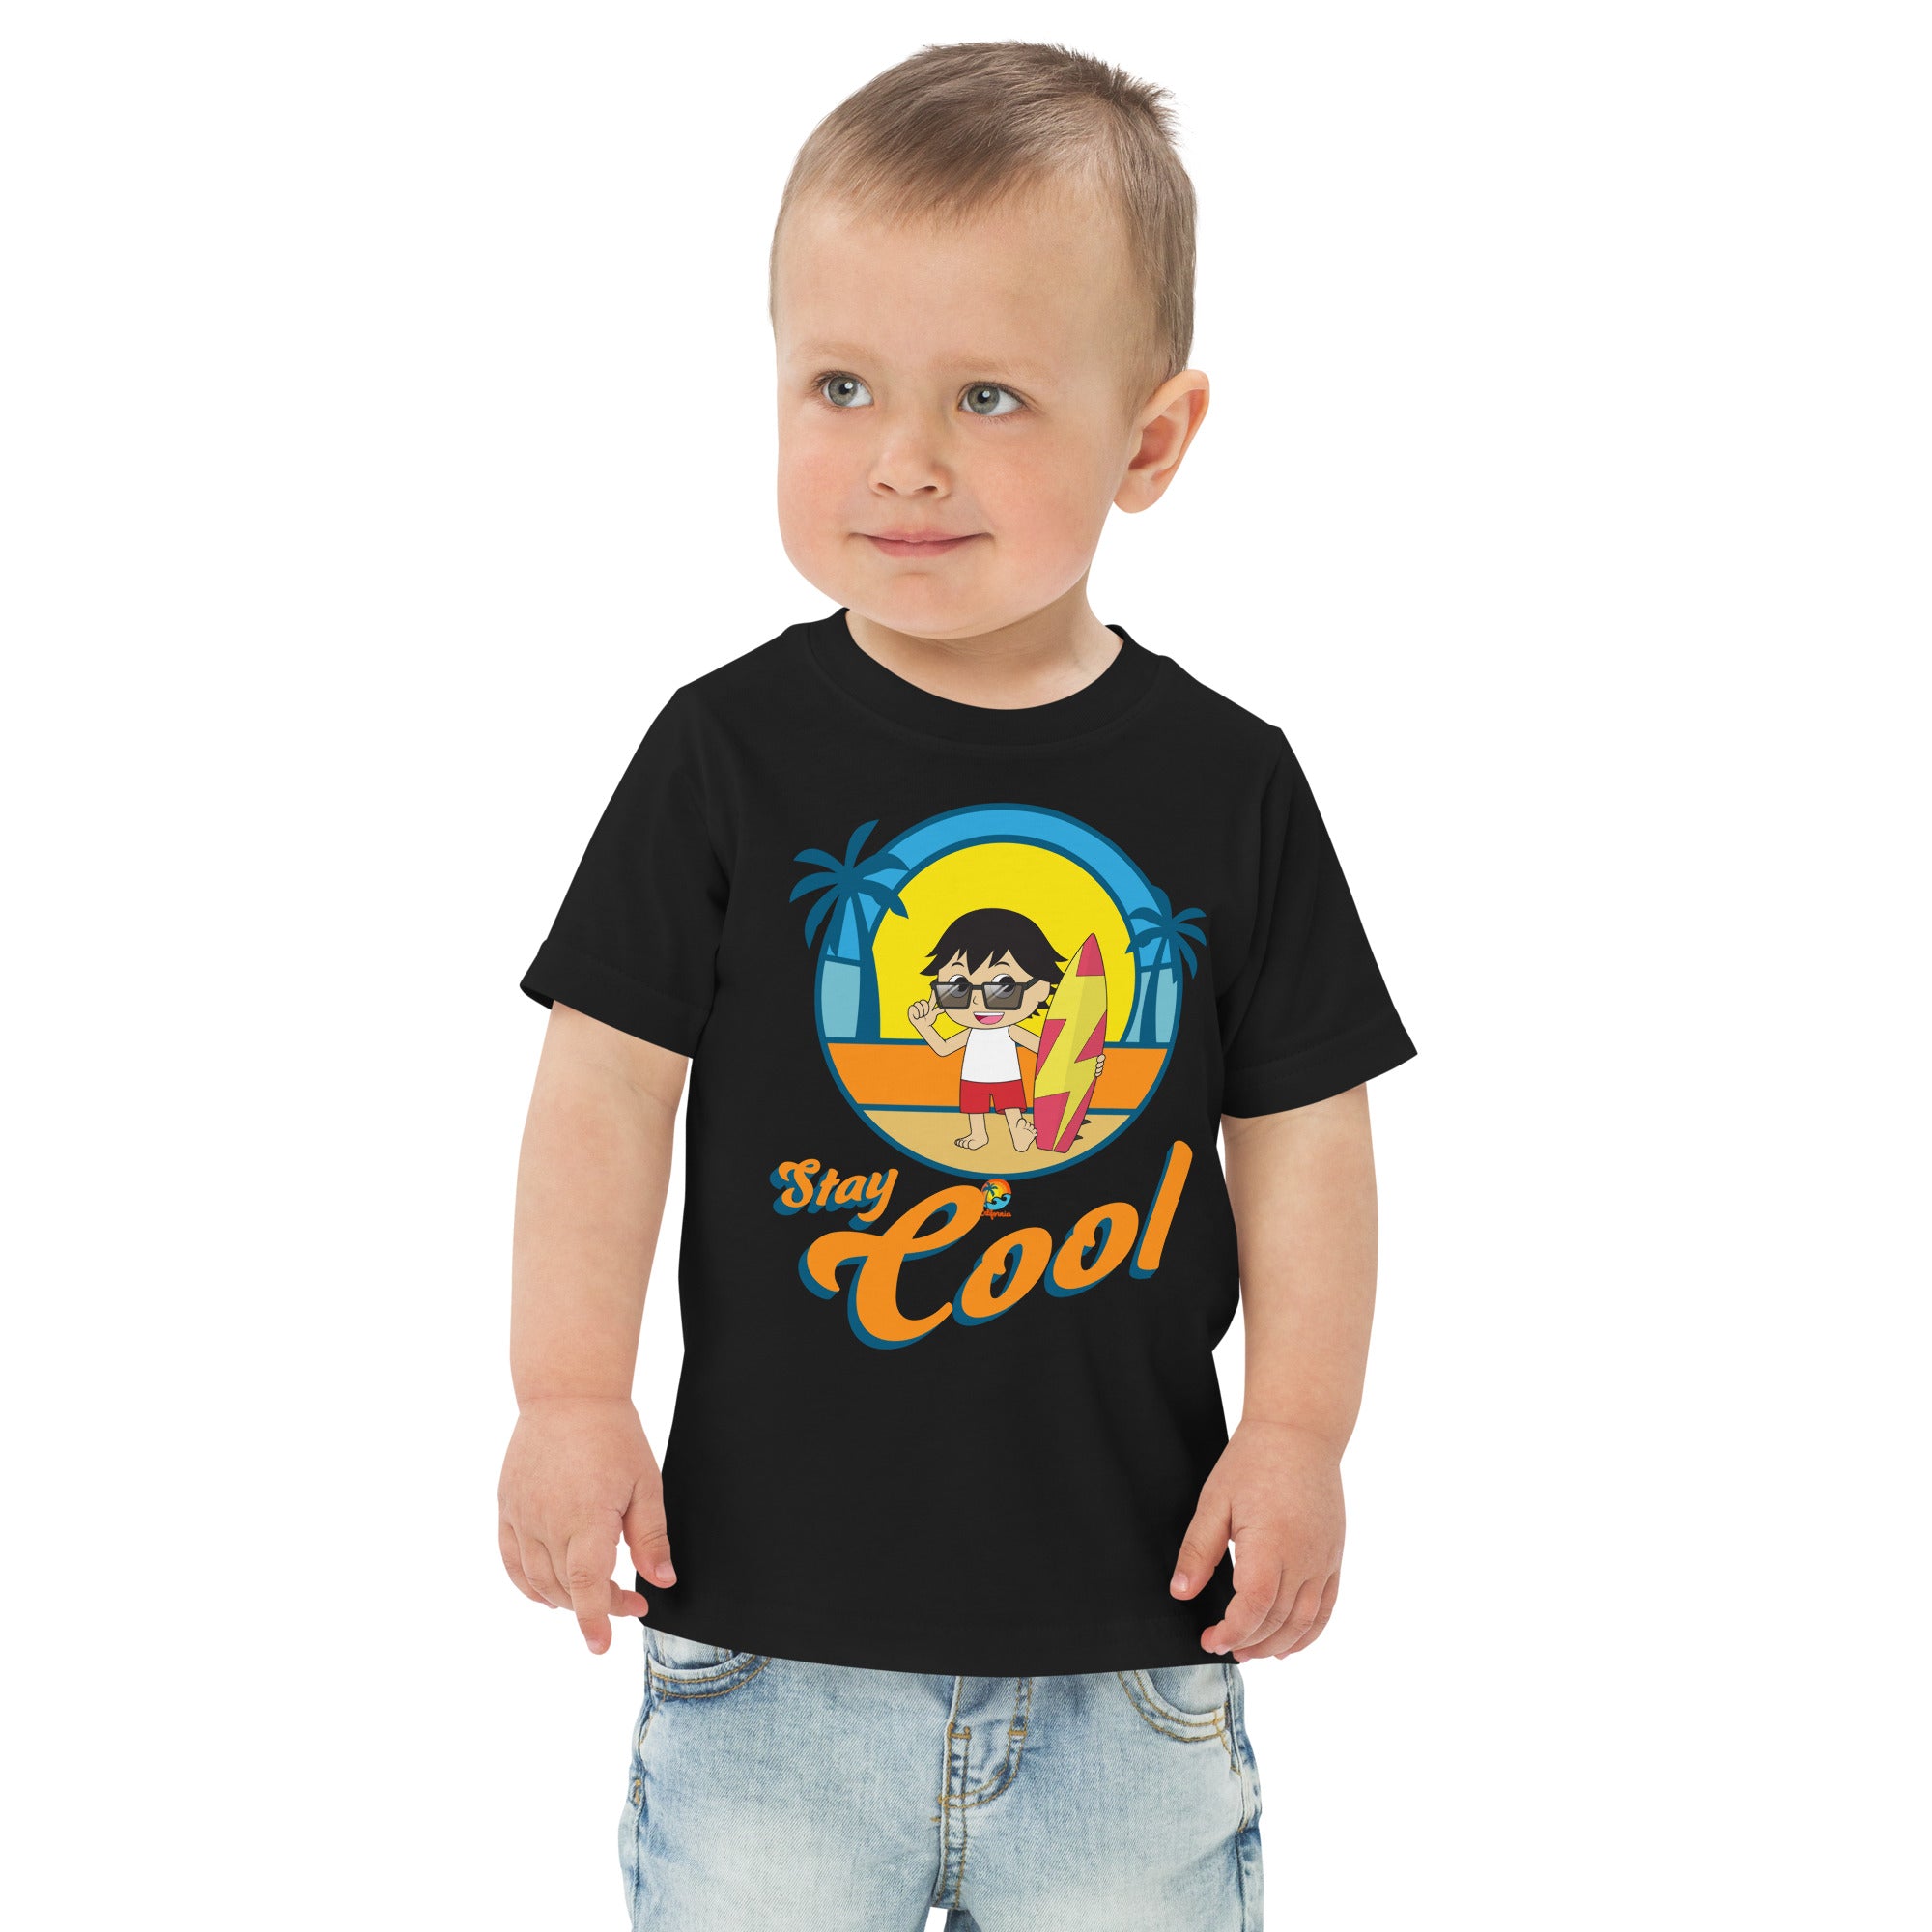 Toddler World World Stay Shop Cool T-shirt Ryan\'s Ryan\'s –